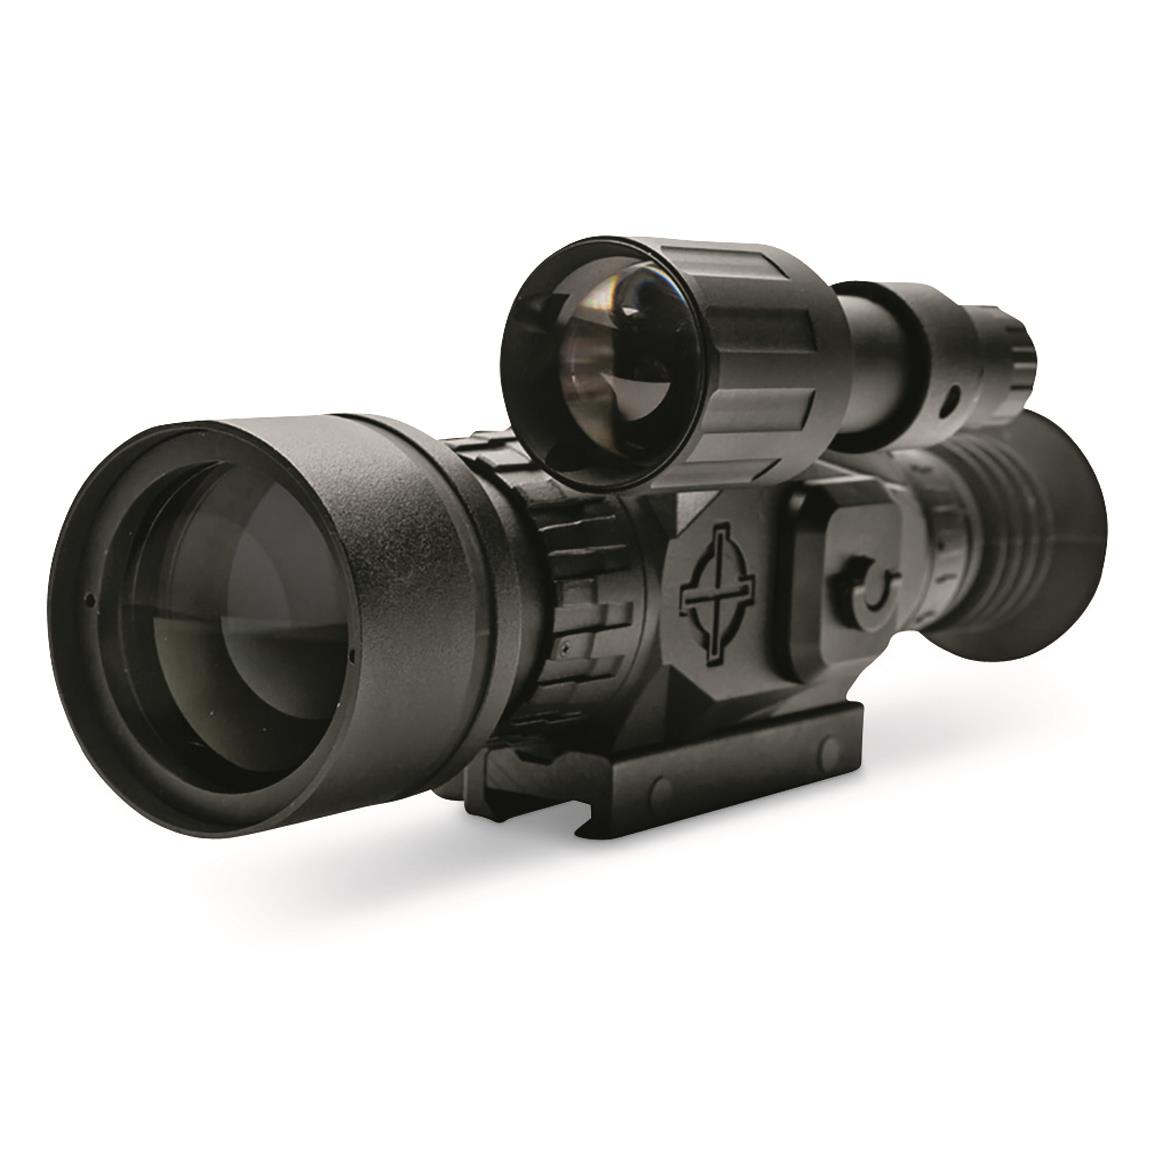 Sightmark Wraith HD 4-32X50mm Digital Riflescope